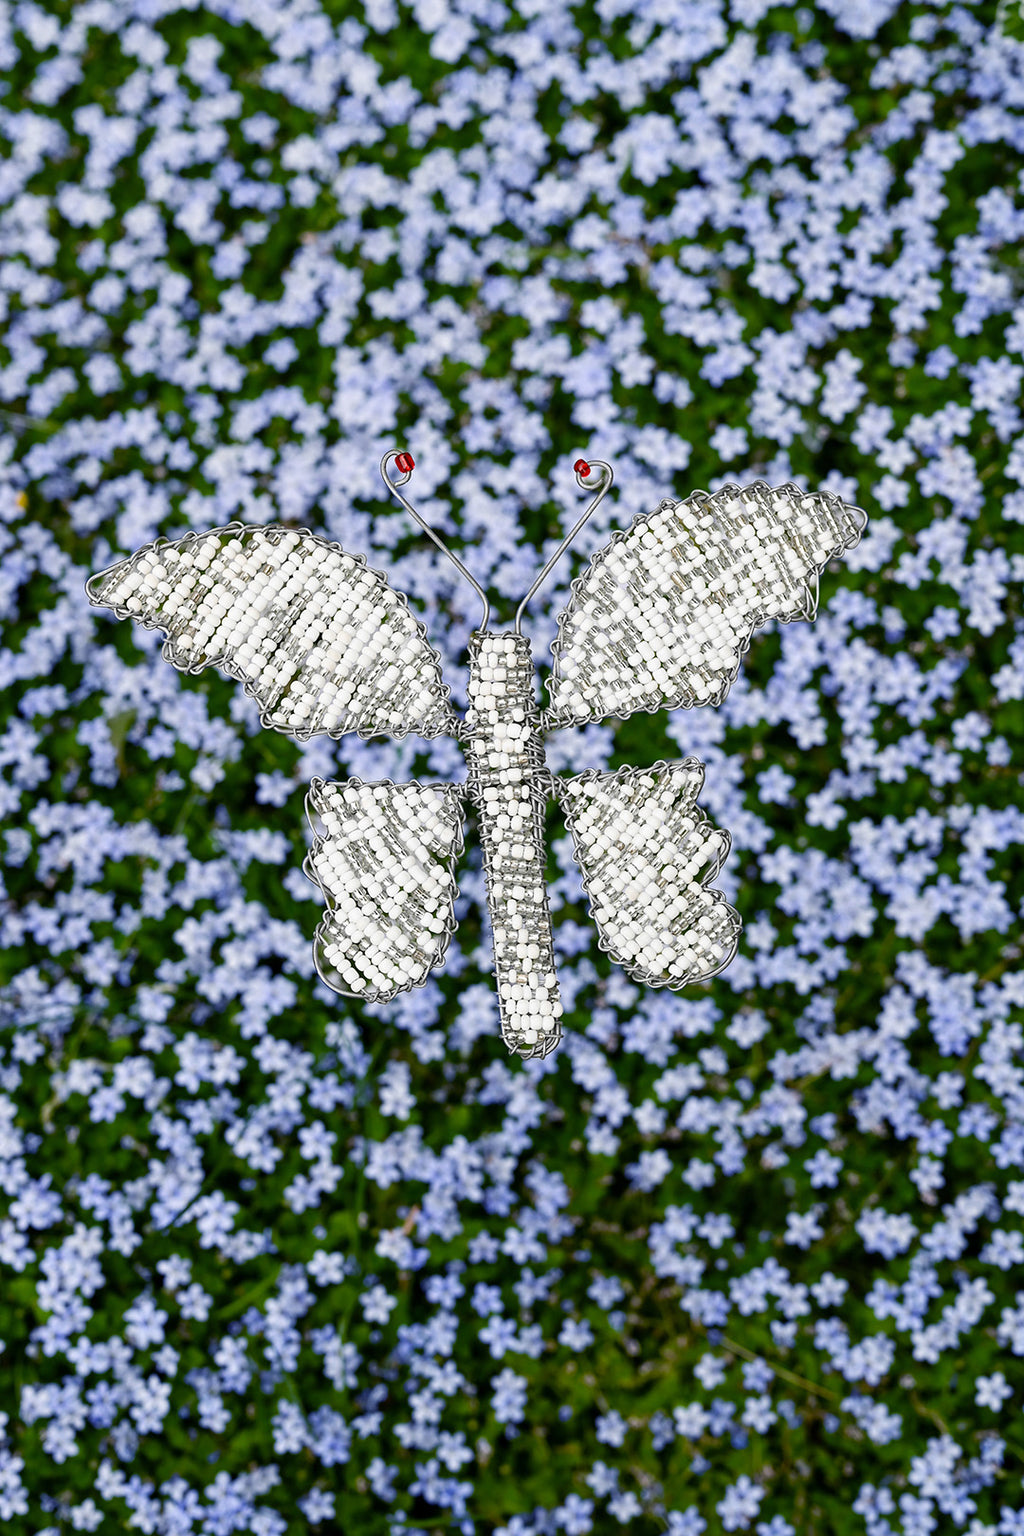 Beaded Butterfly Garden Stake - White